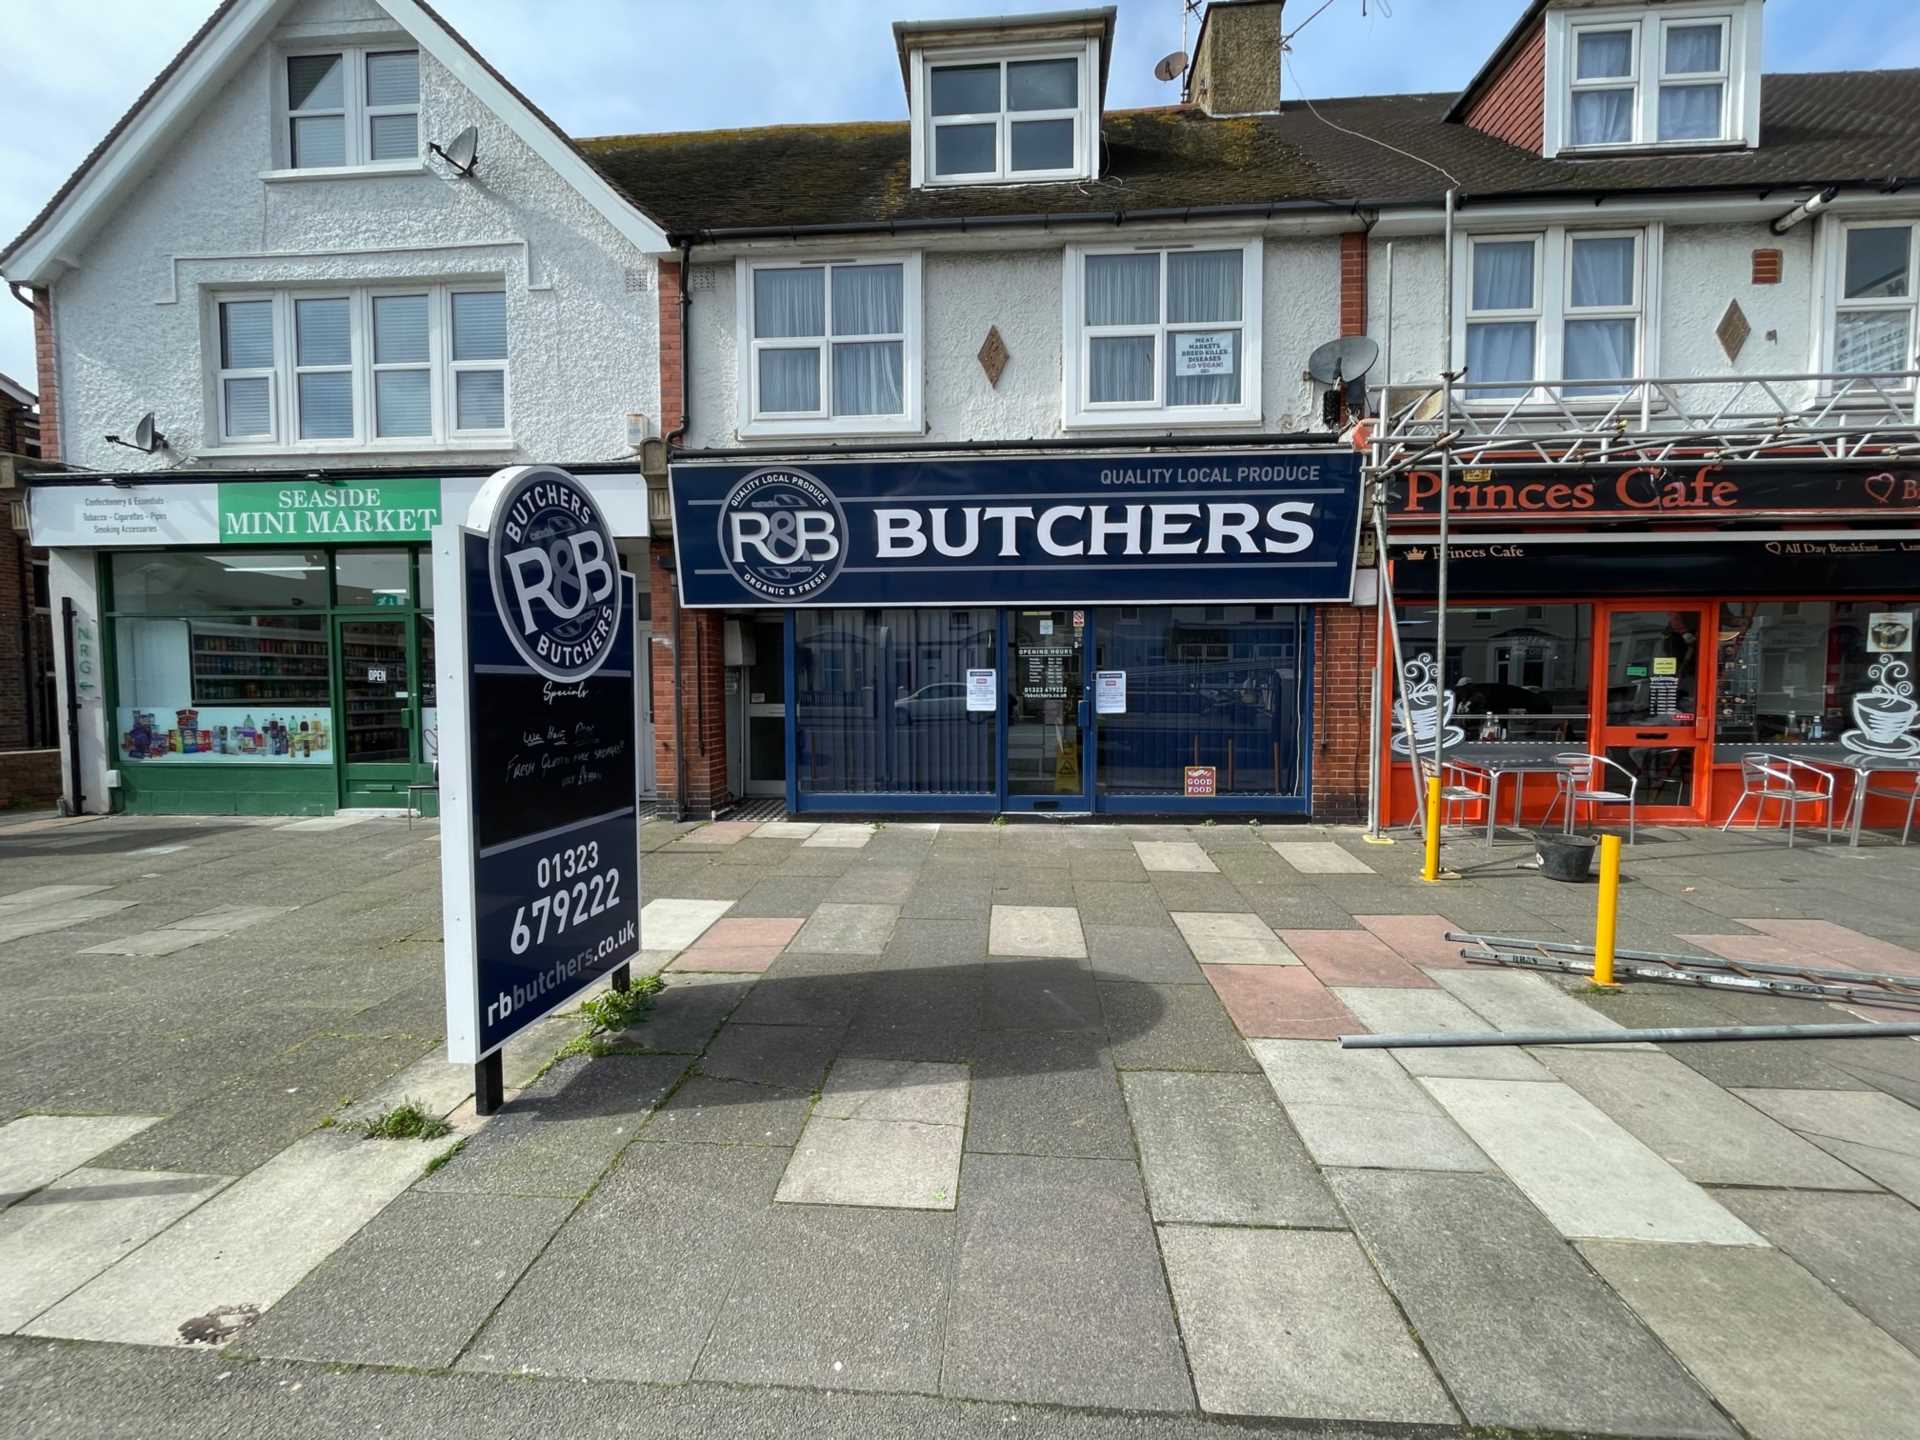 Seaside (R&B Butchers), Seaside, Eastbourne, Image 1